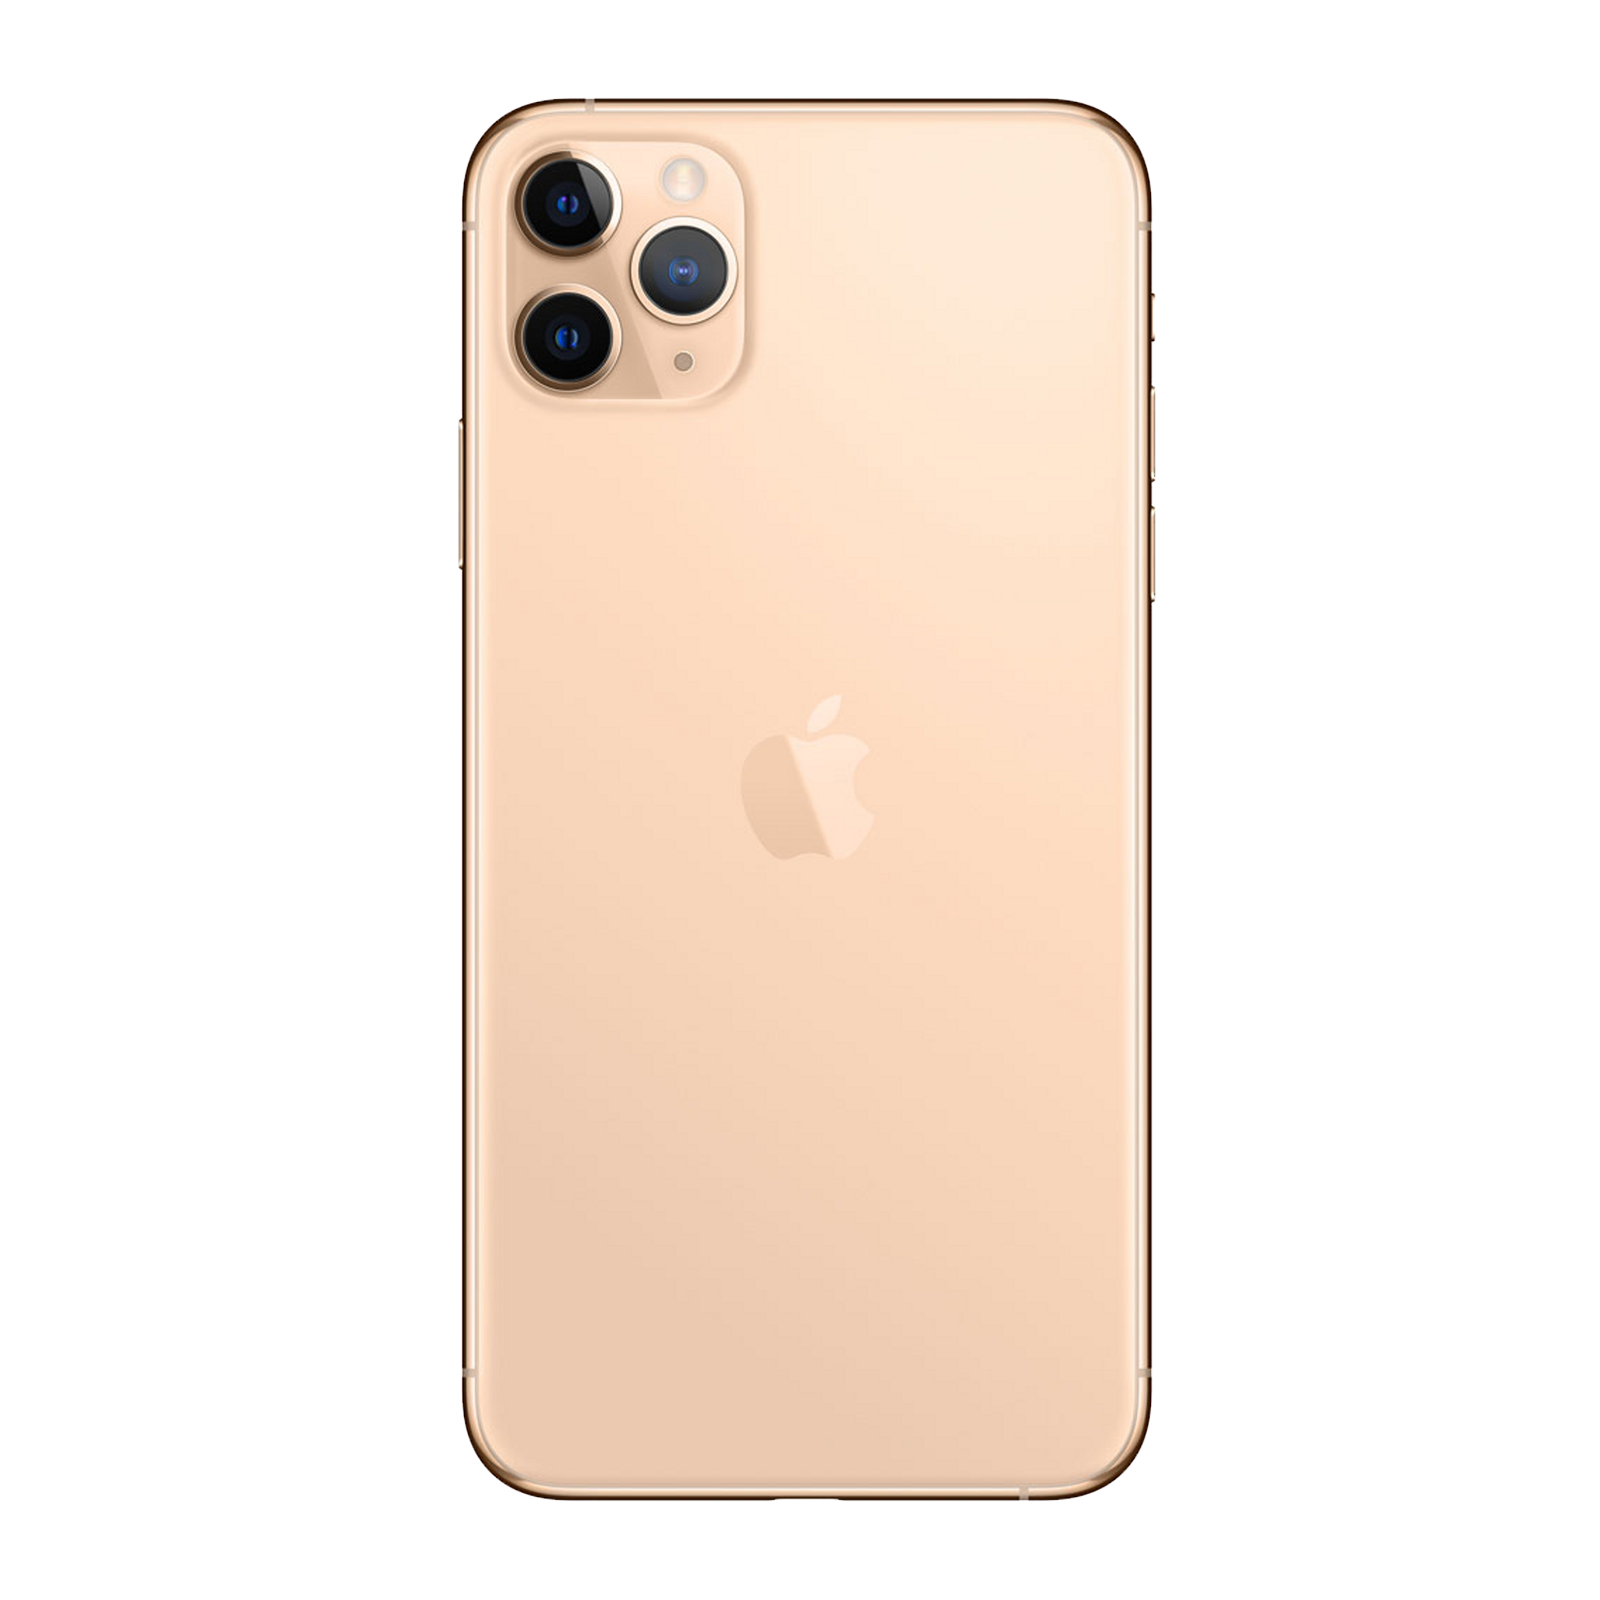 iPhone 11 Pro 256GB Gold Fair - Unlocked